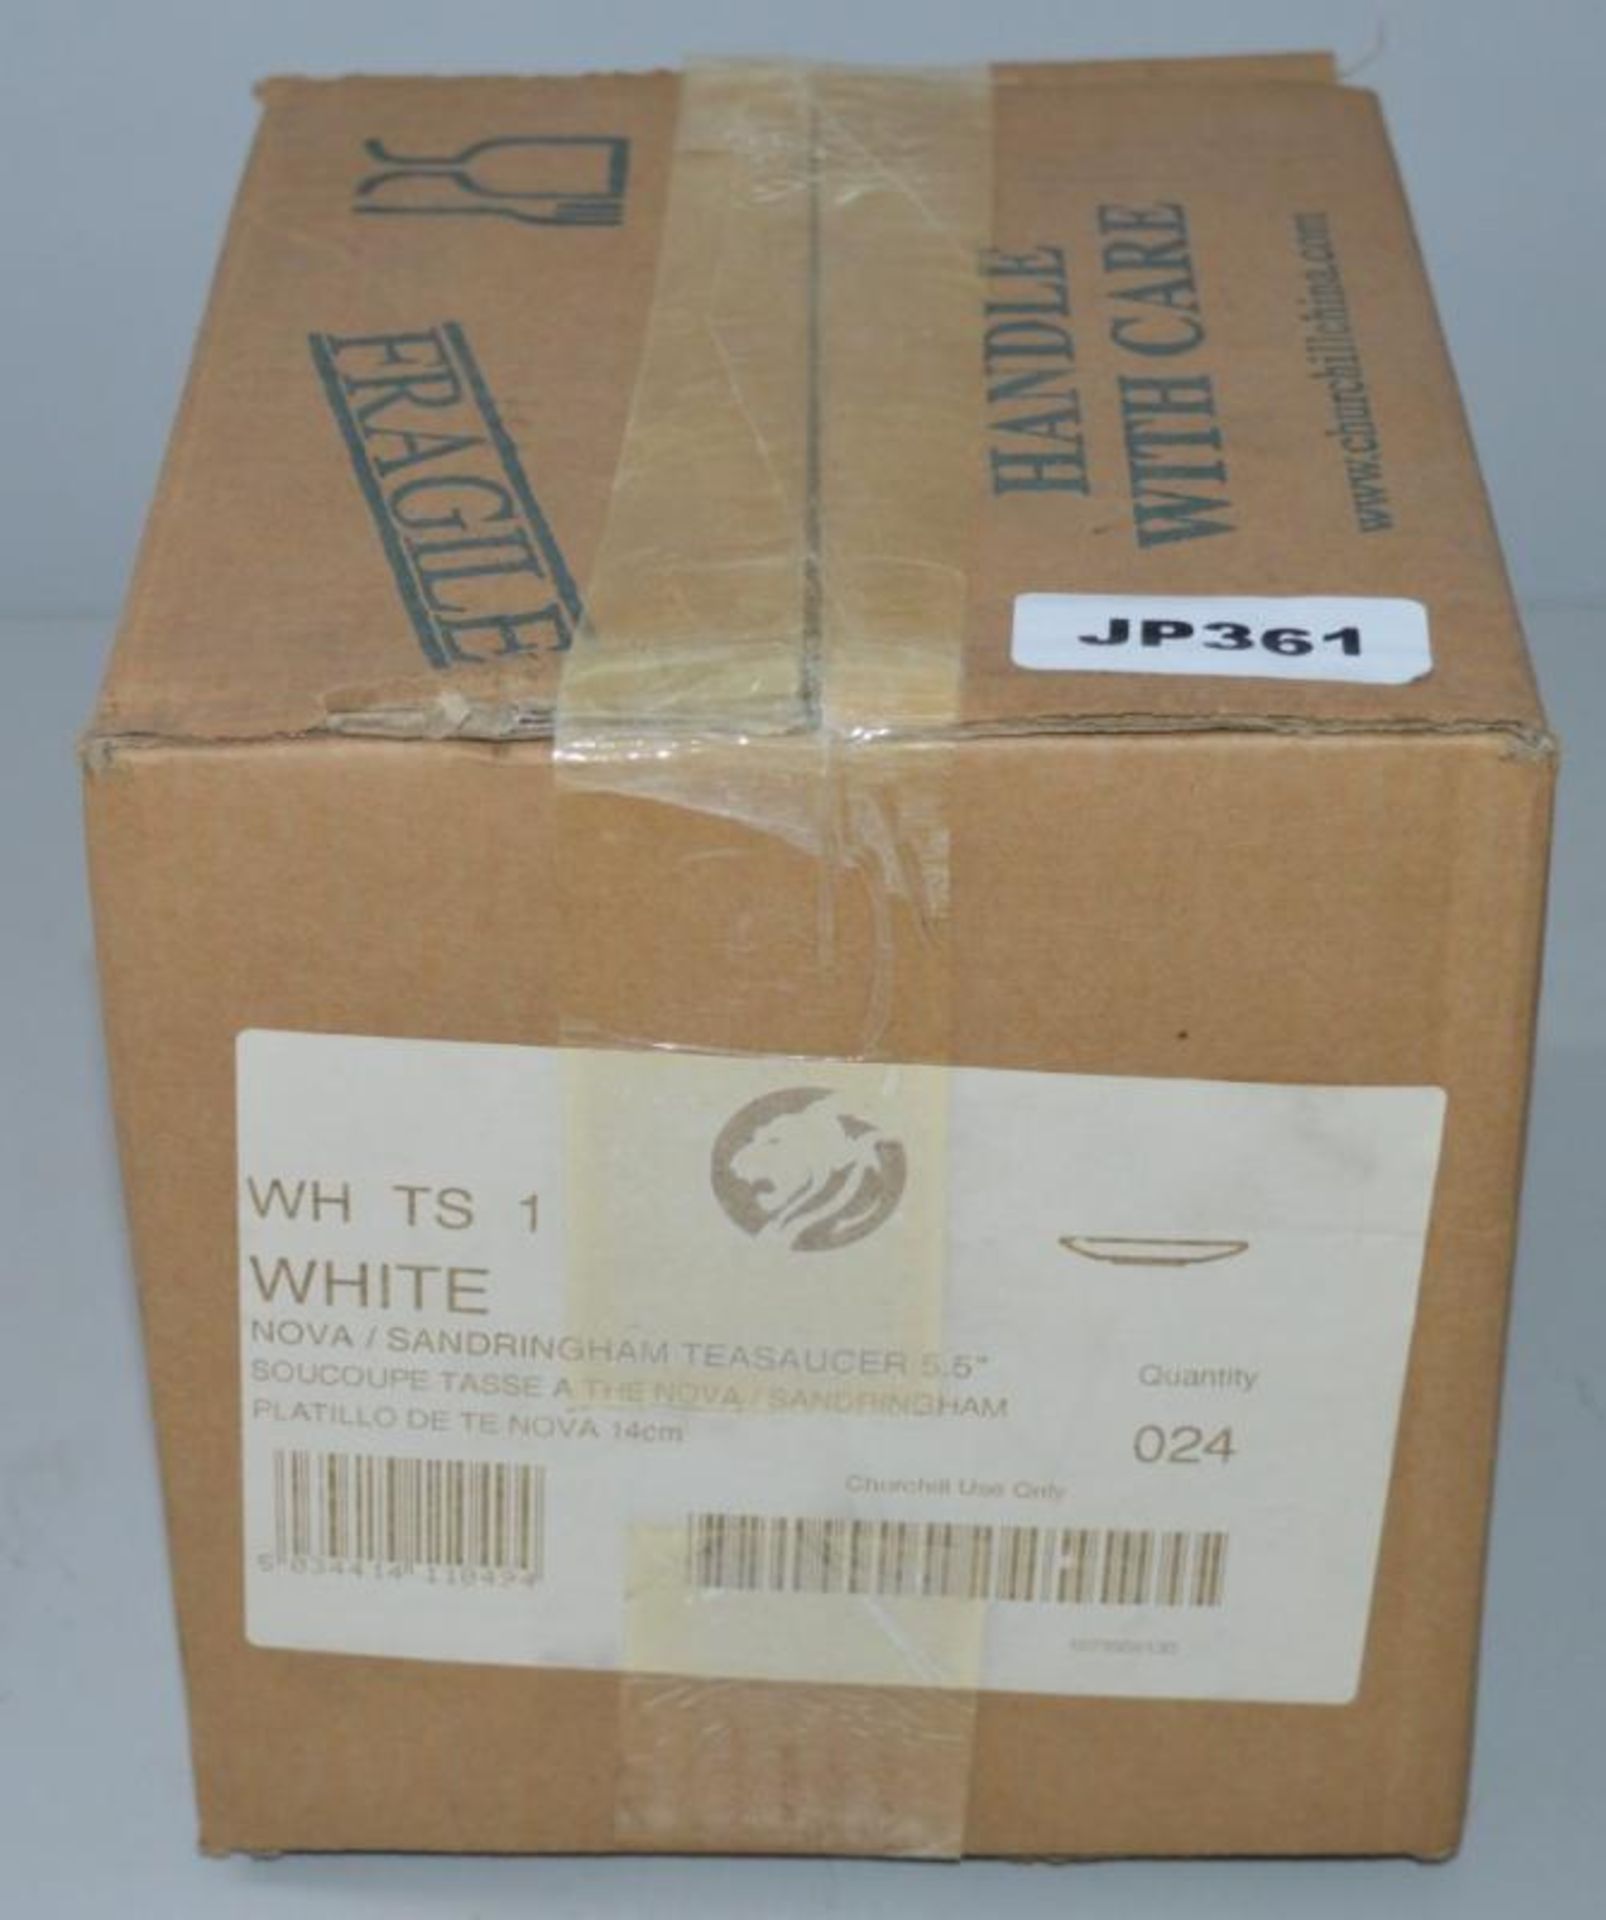 96 x Churchill Plain White Nova Tea Saucers 5.5" - New Boxed Stock - rrp £184 - CL232 - Ref JP361 - Image 2 of 4